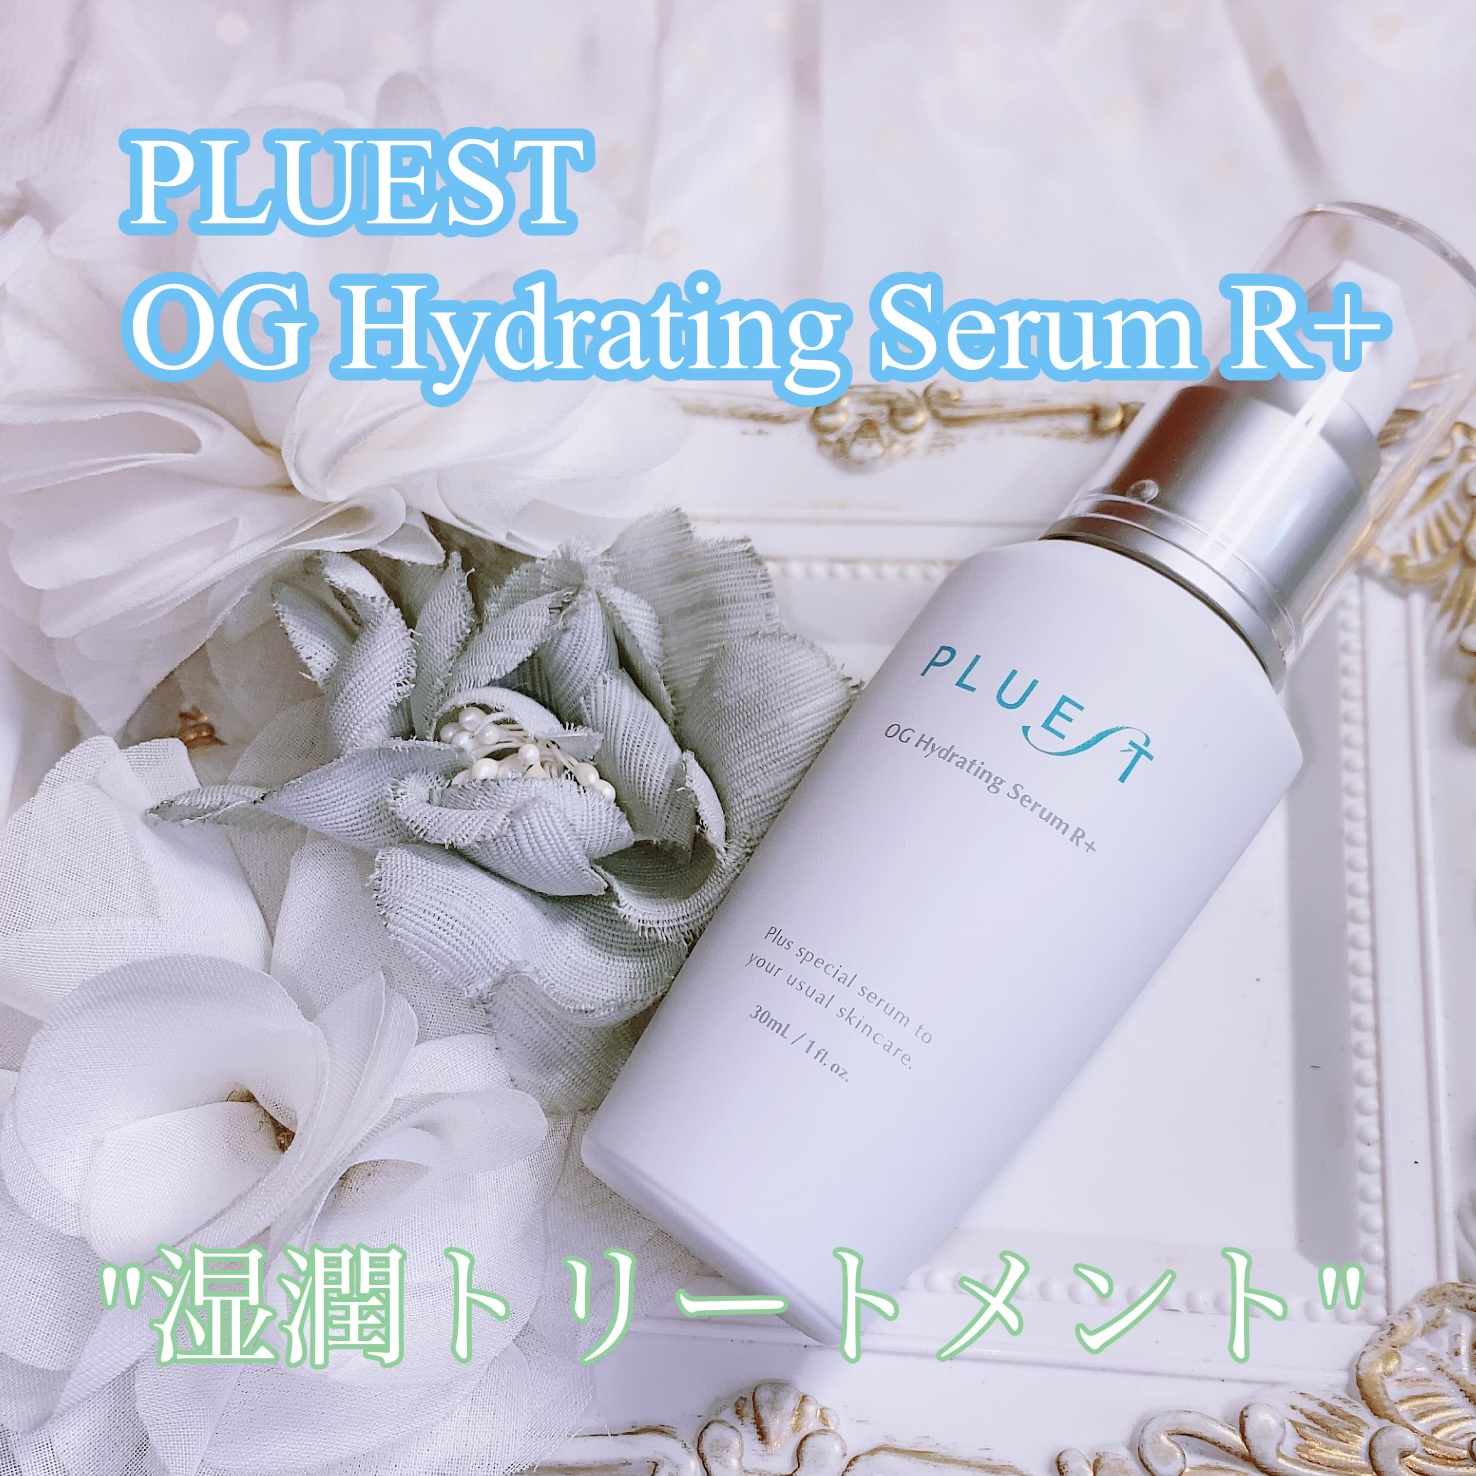 PLUEST OG Hydrating Serum R 30ml